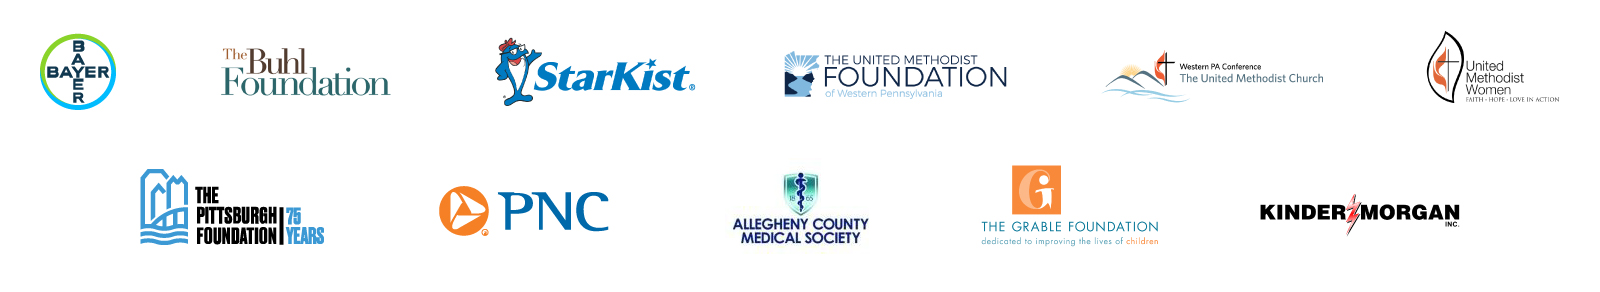 Funders of United Methodist Church Union Logos